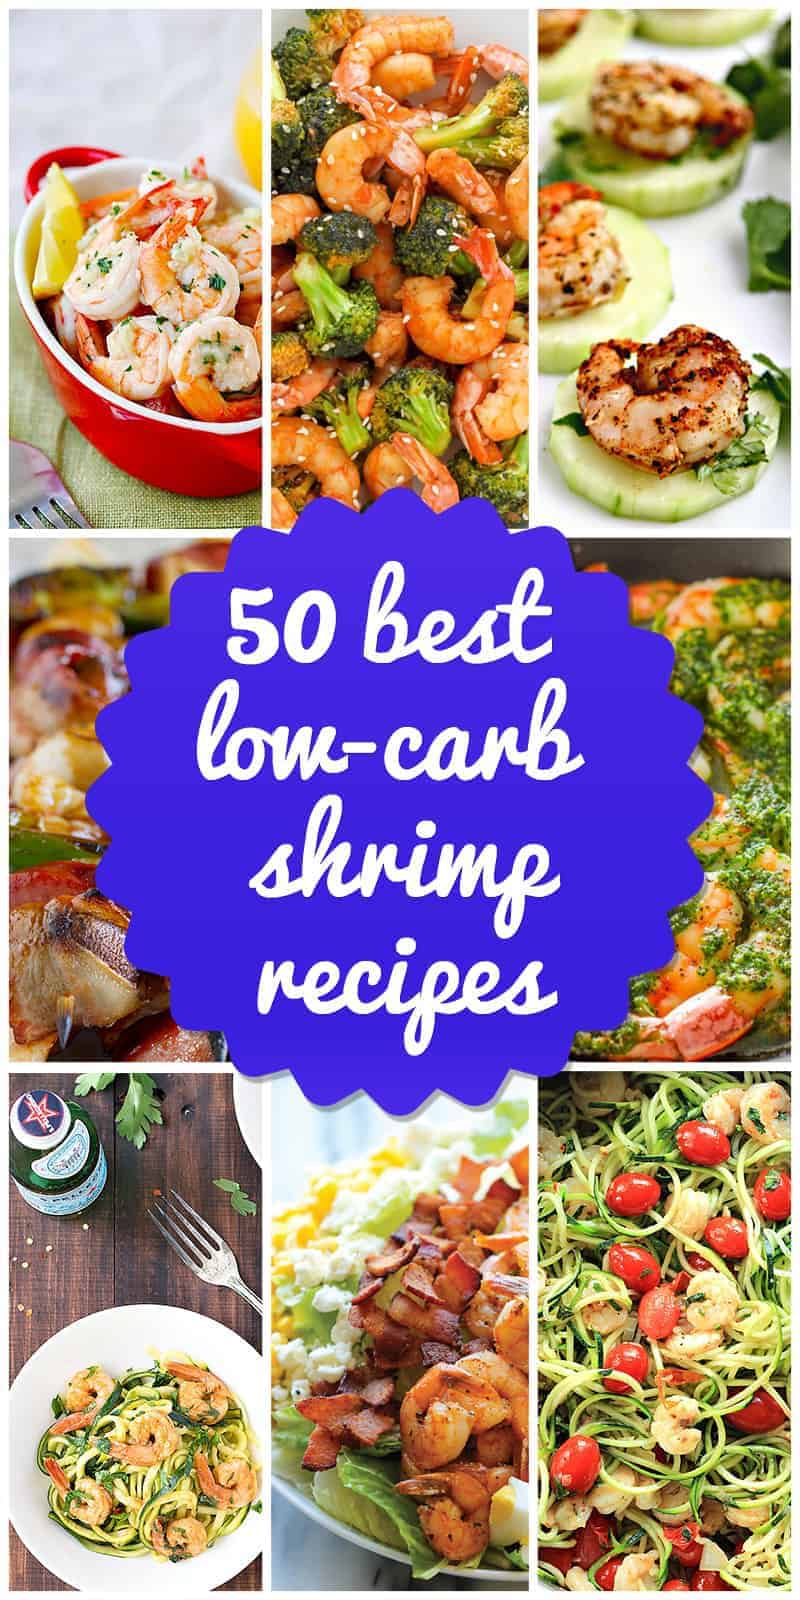 Best Low-carb shrimp recipes